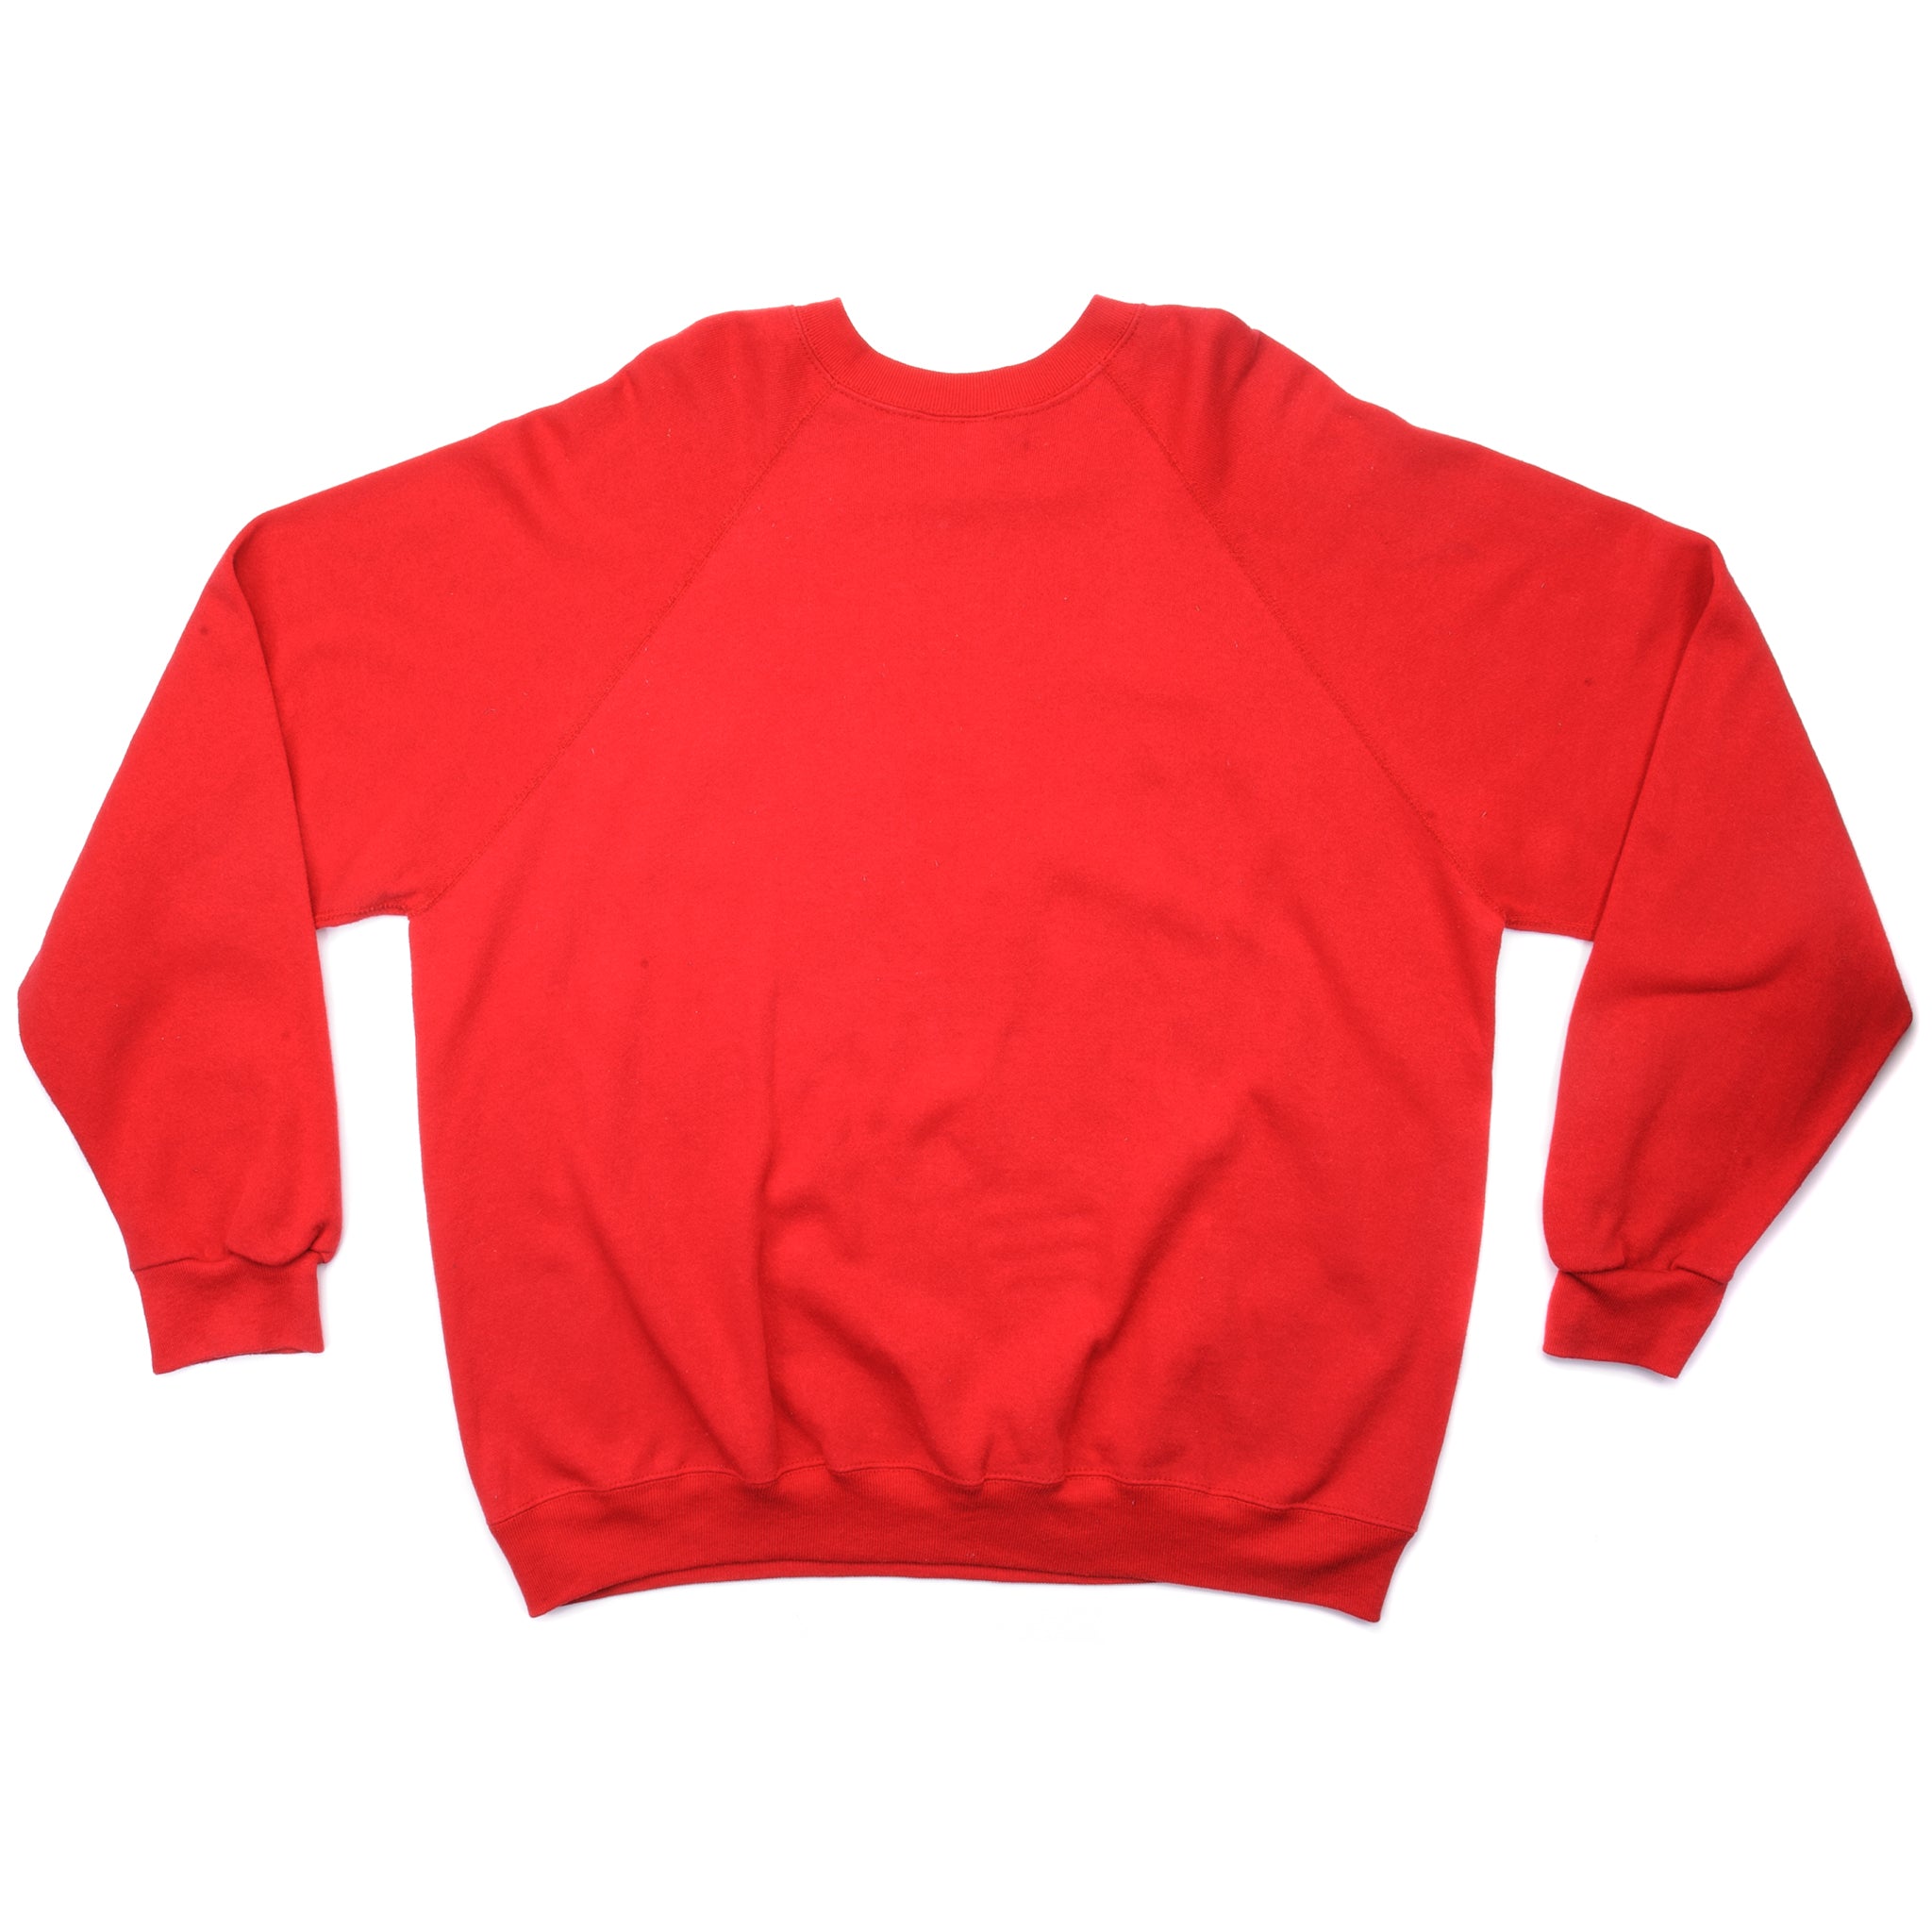 Vintage NHL Chicago Blackhawks Sweatshirt 1991 Size XL Made in USA